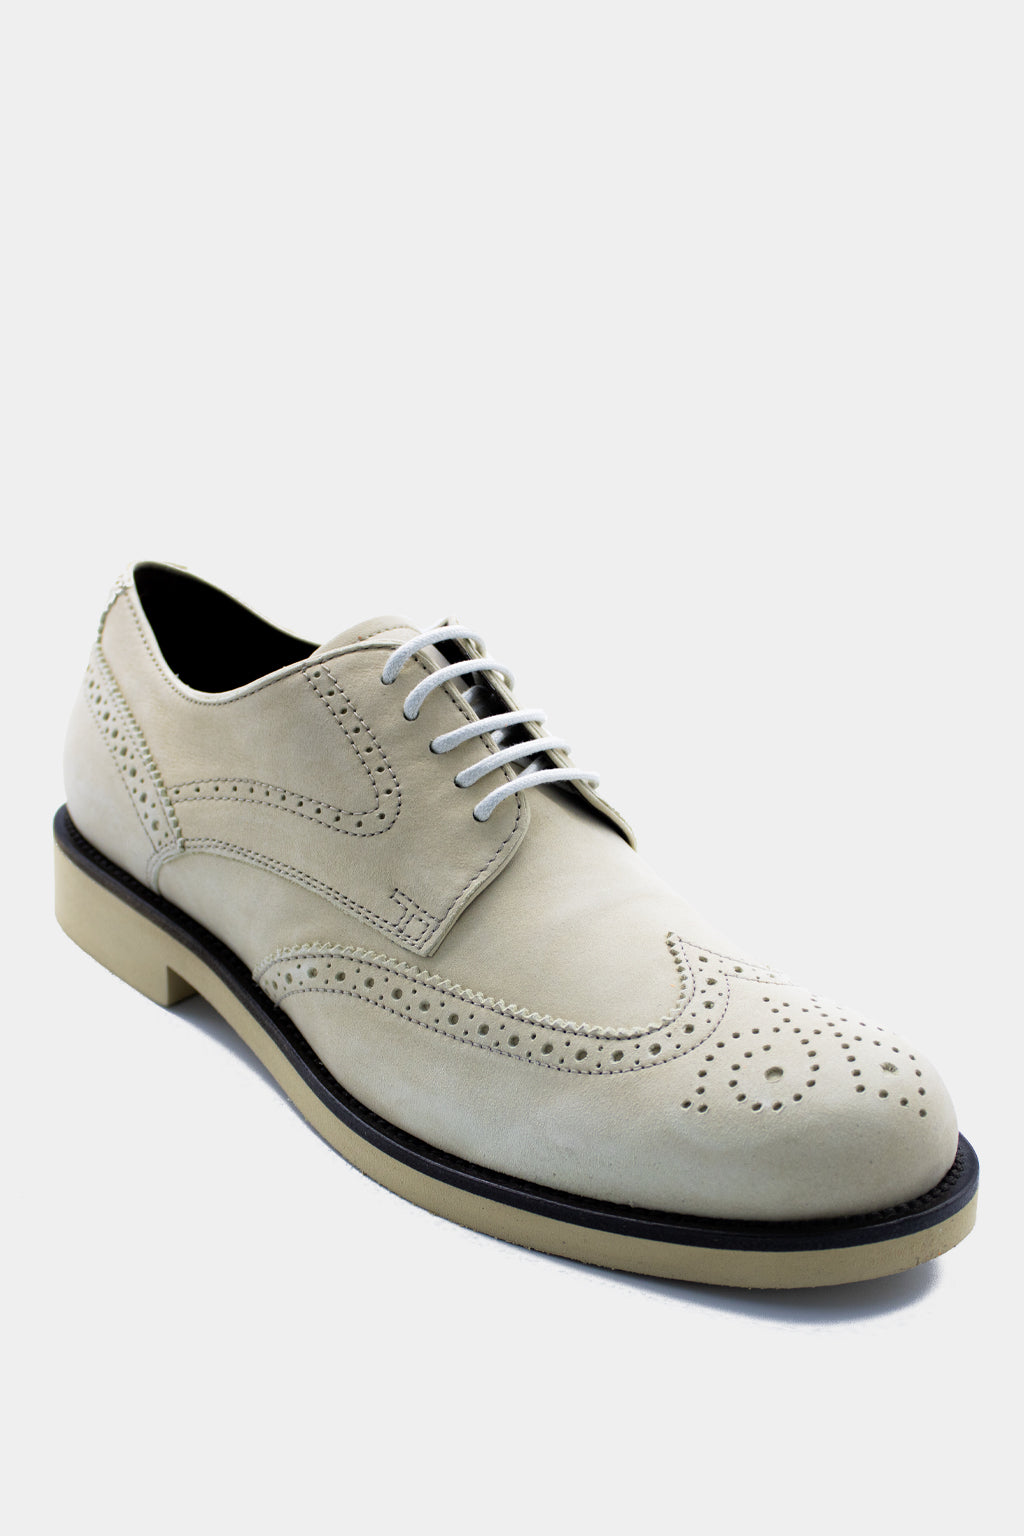 Tod's - Men's Beige Leather Detail Lace Up Shoe